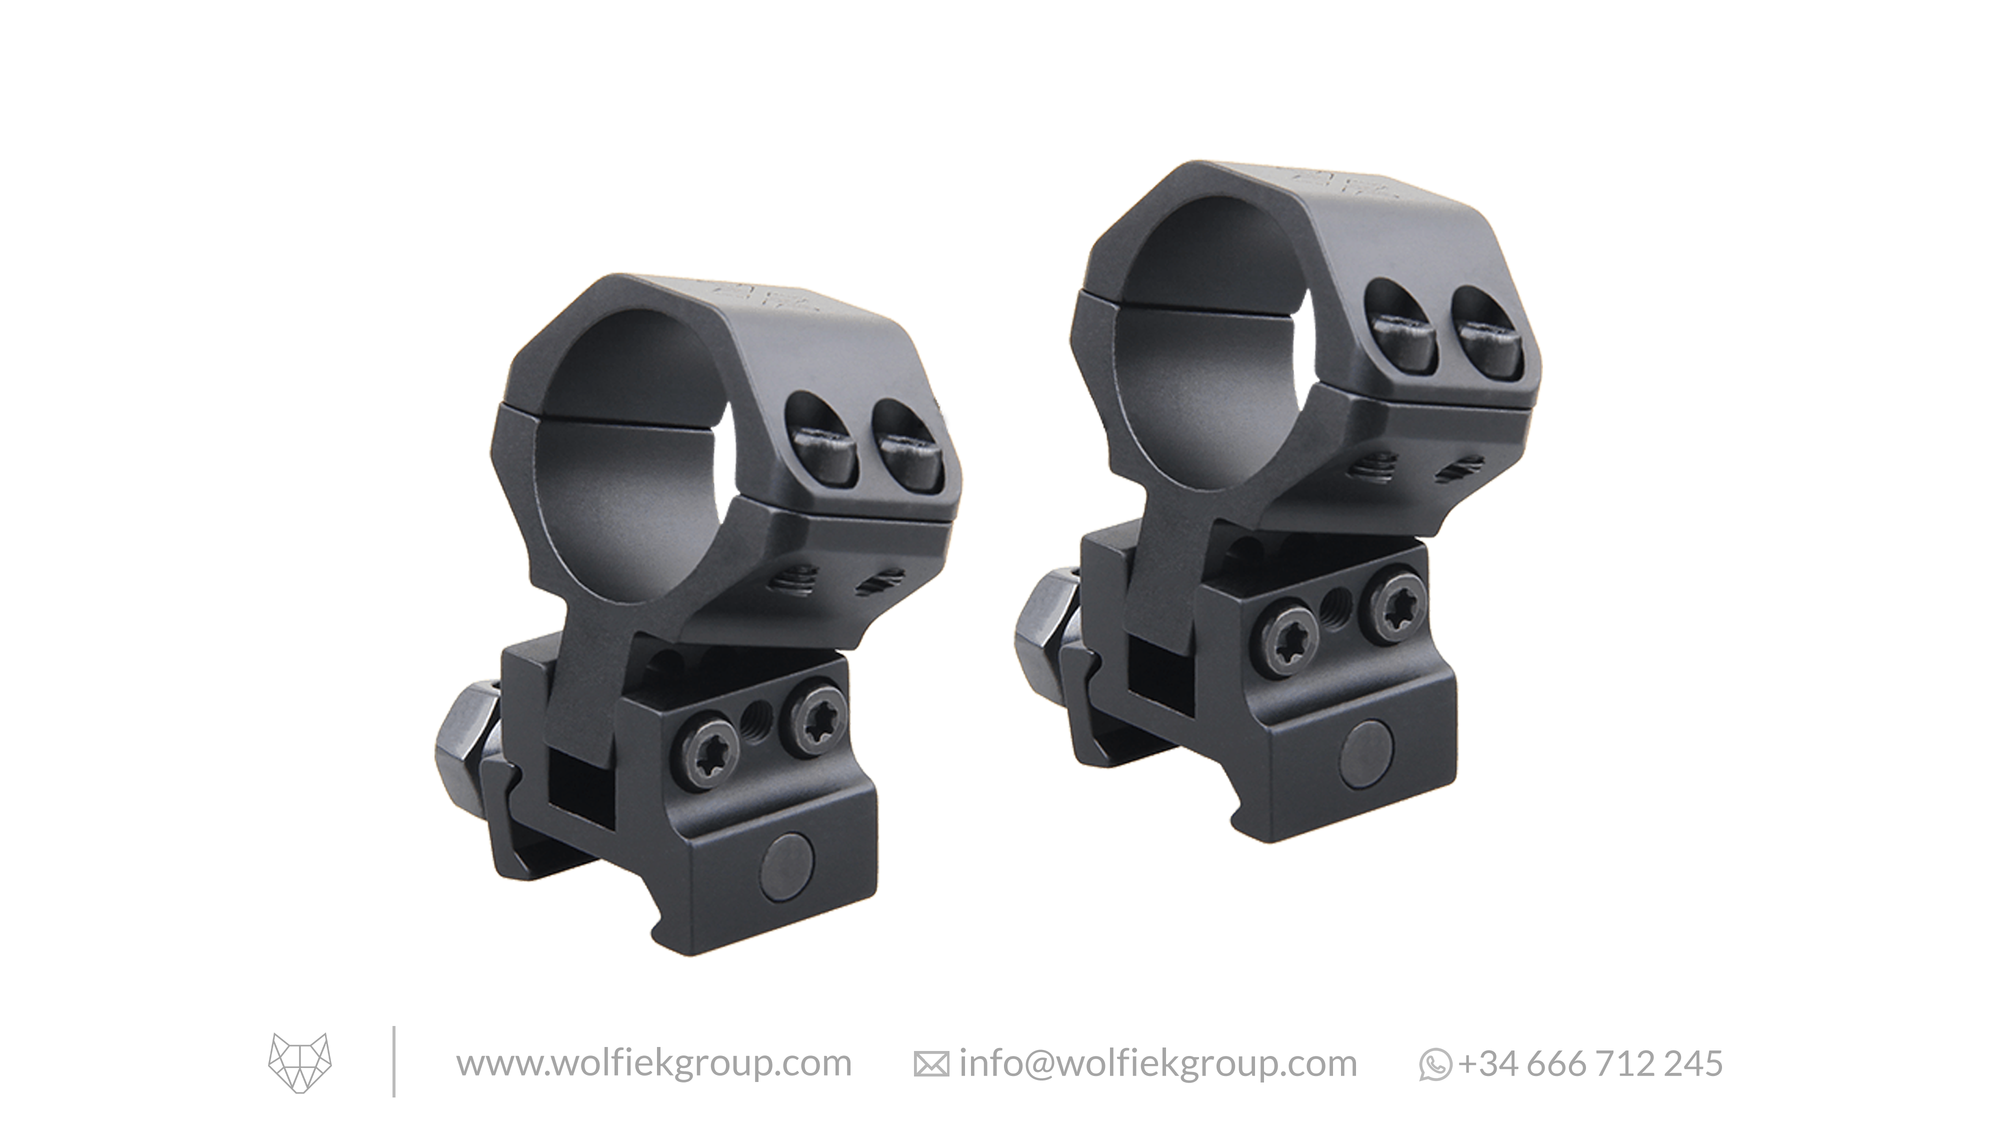 Two adjustable scope mounts in black 